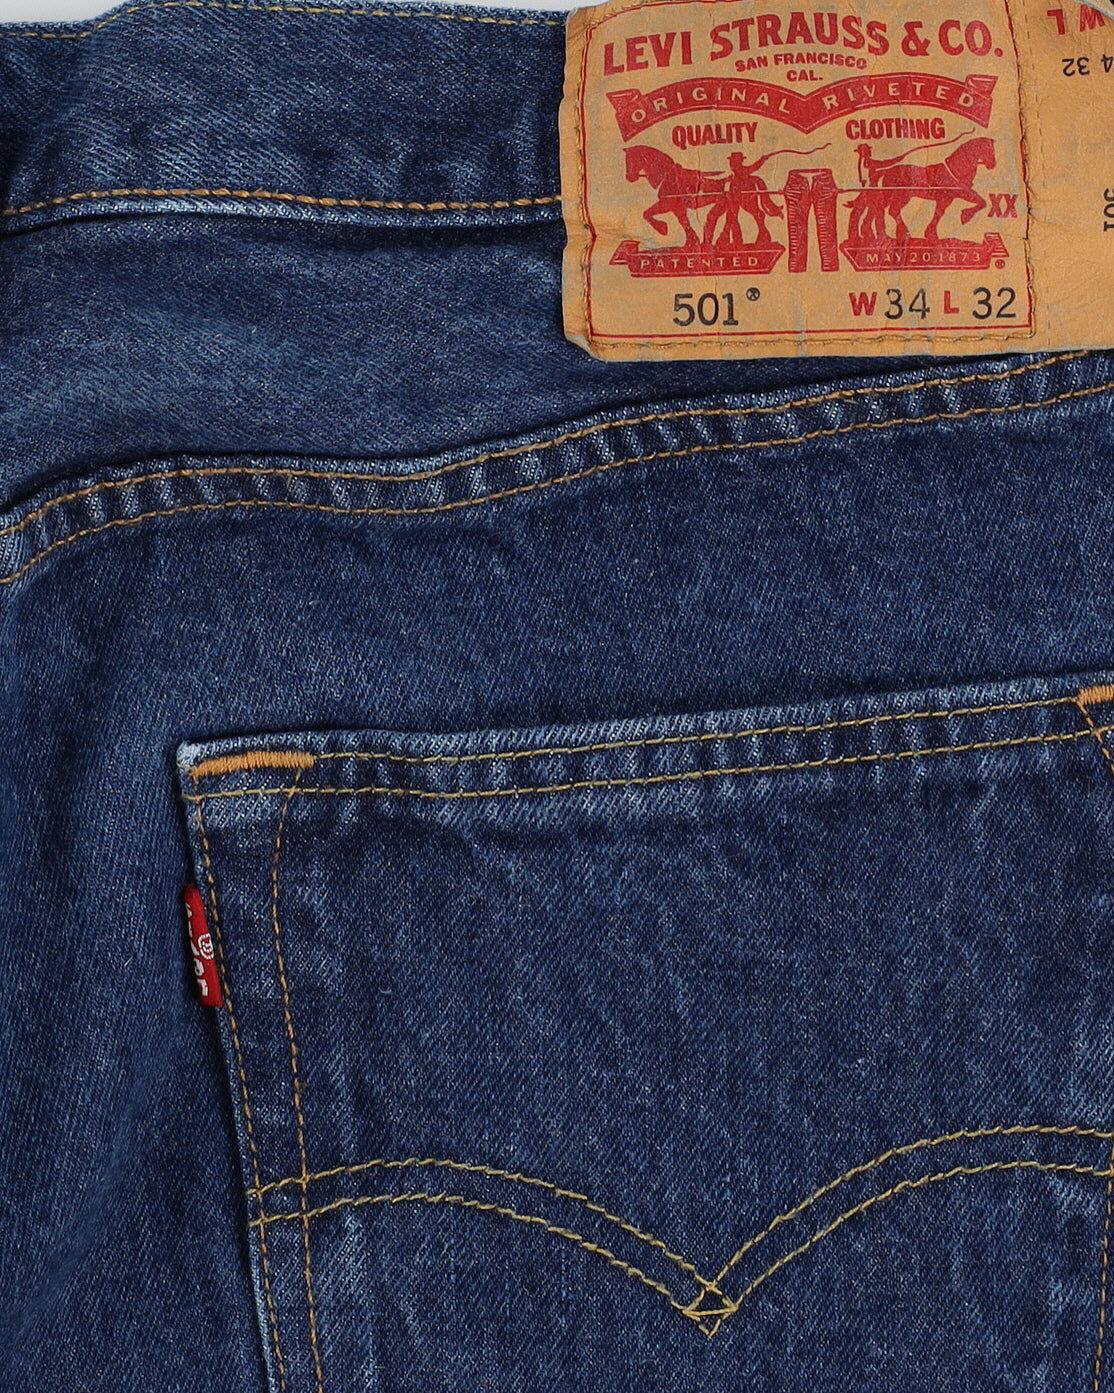 Vintage 90s Levi's 501 Dark Blue Jeans - W35 L32